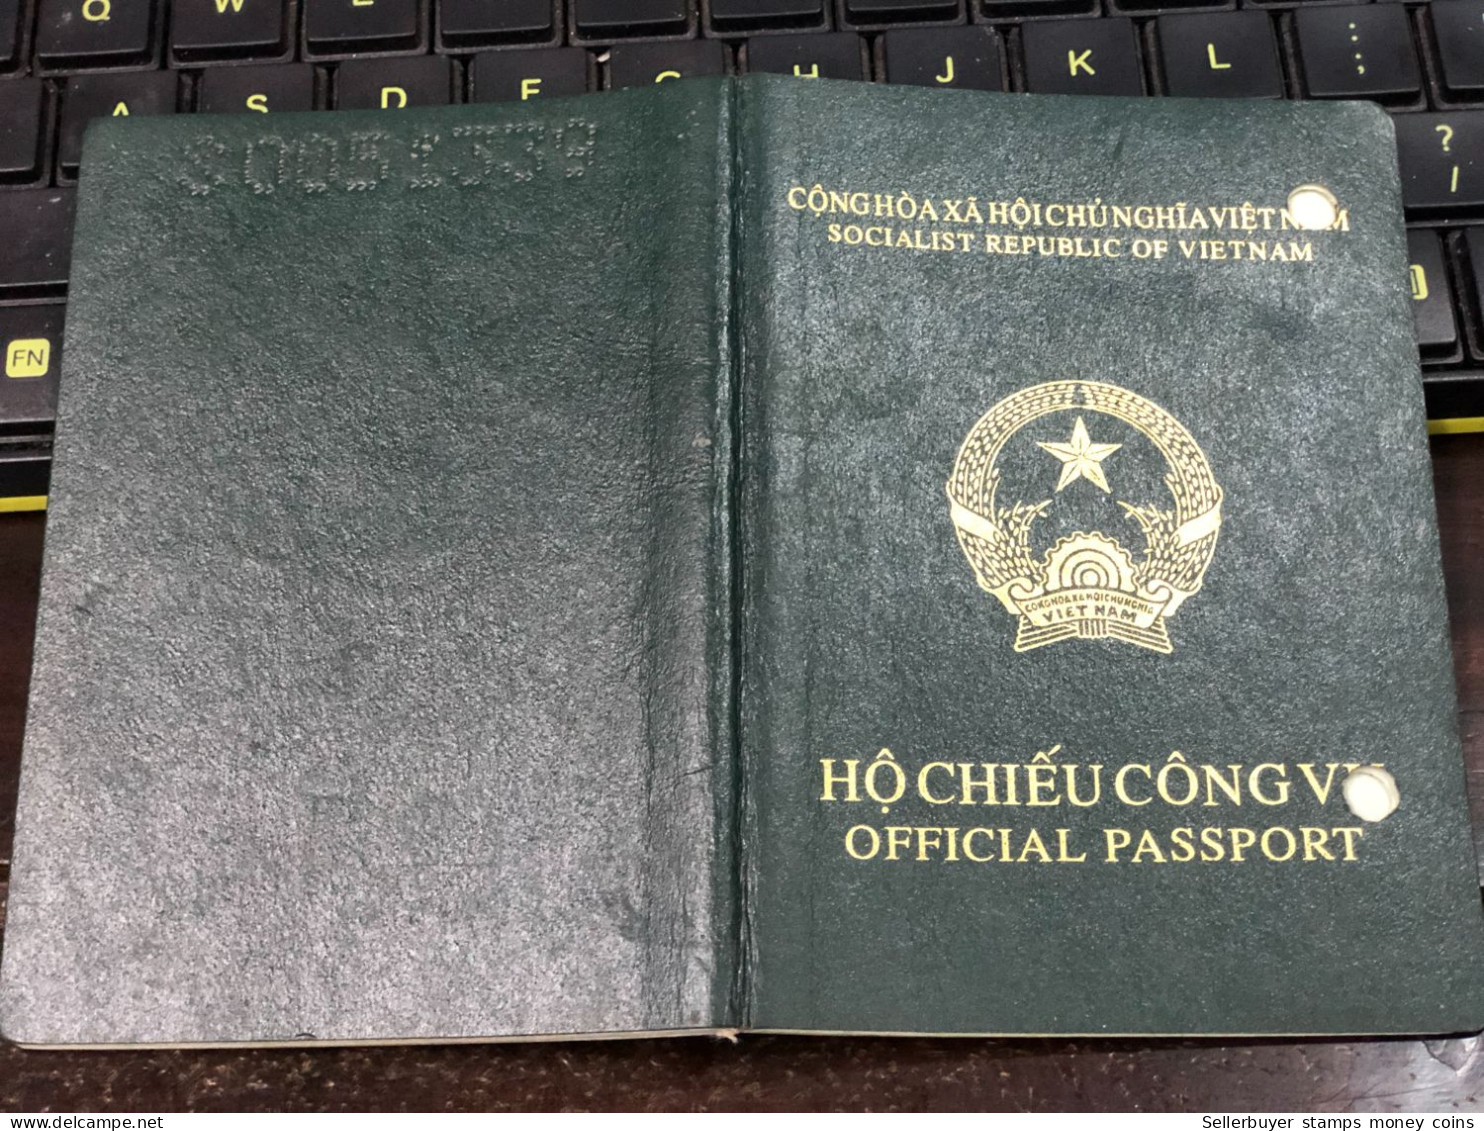 VIET NAMESE-OLD-ID PASSPORT VIET NAM-PASSPORT Is Still Good-name-nguyen Van Minh-2004-1pcs Book - Sammlungen